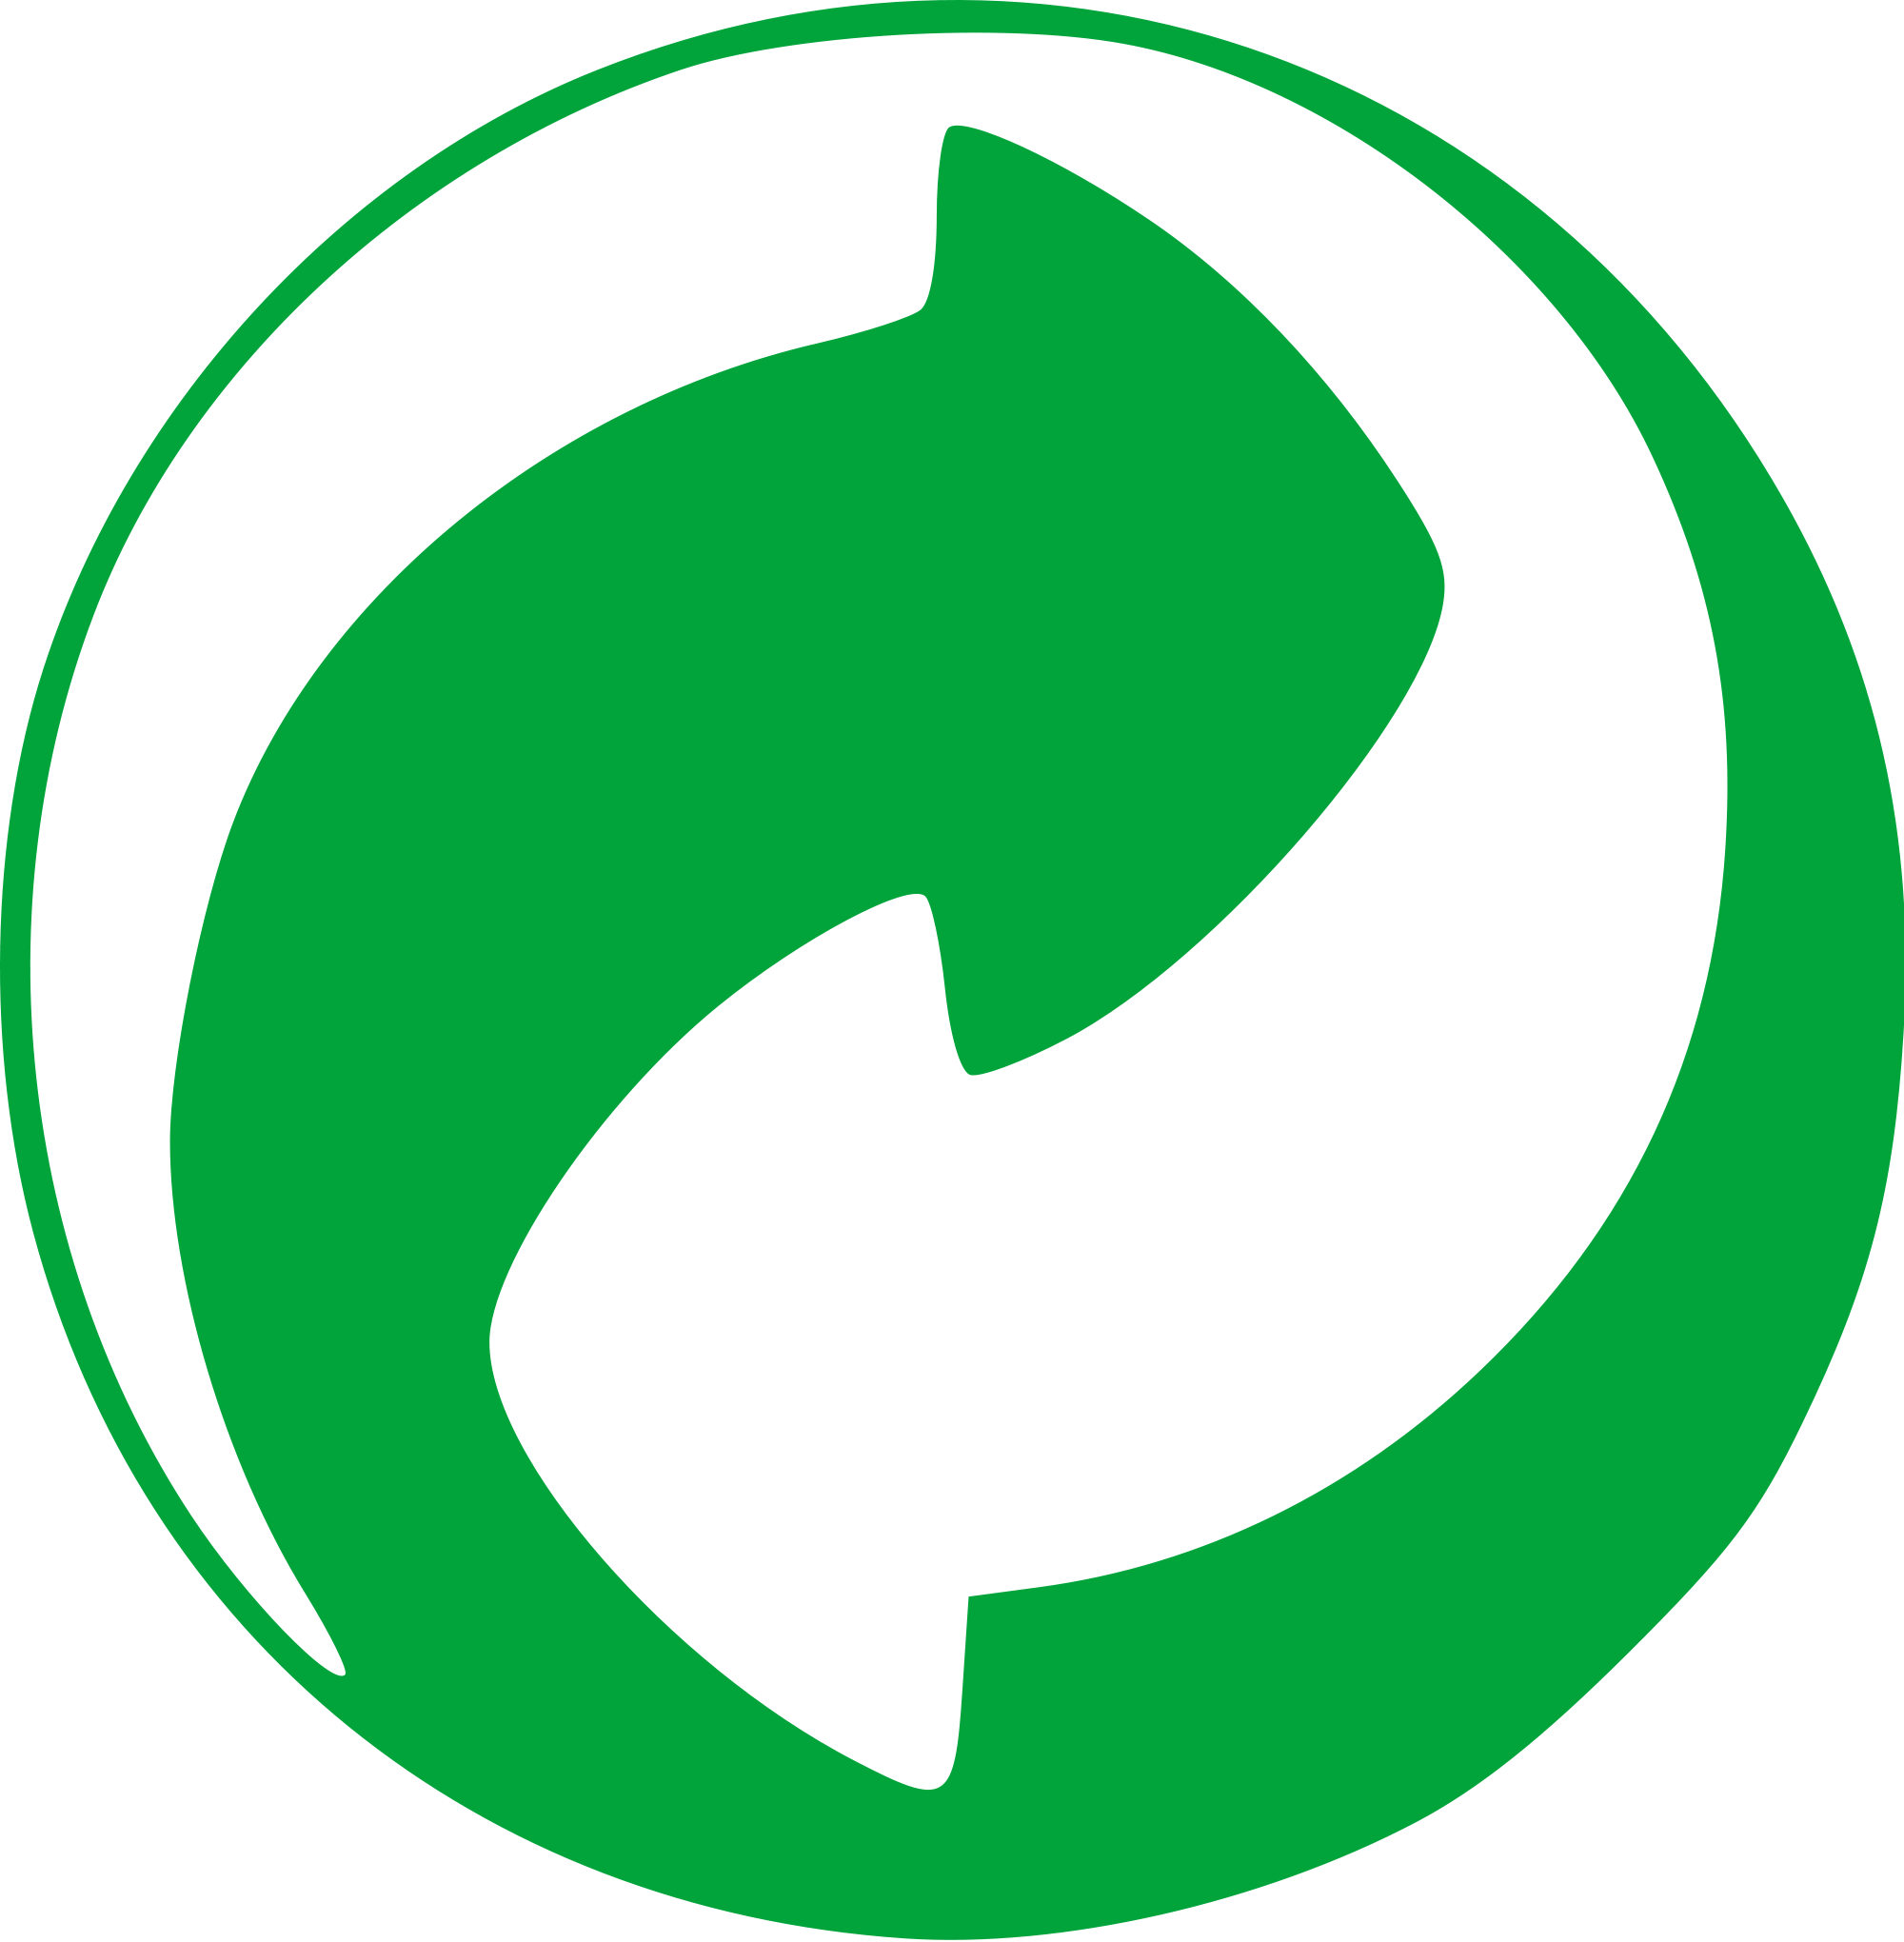 Green Dot (symbol) - Wikipedia, the free encyclopedia